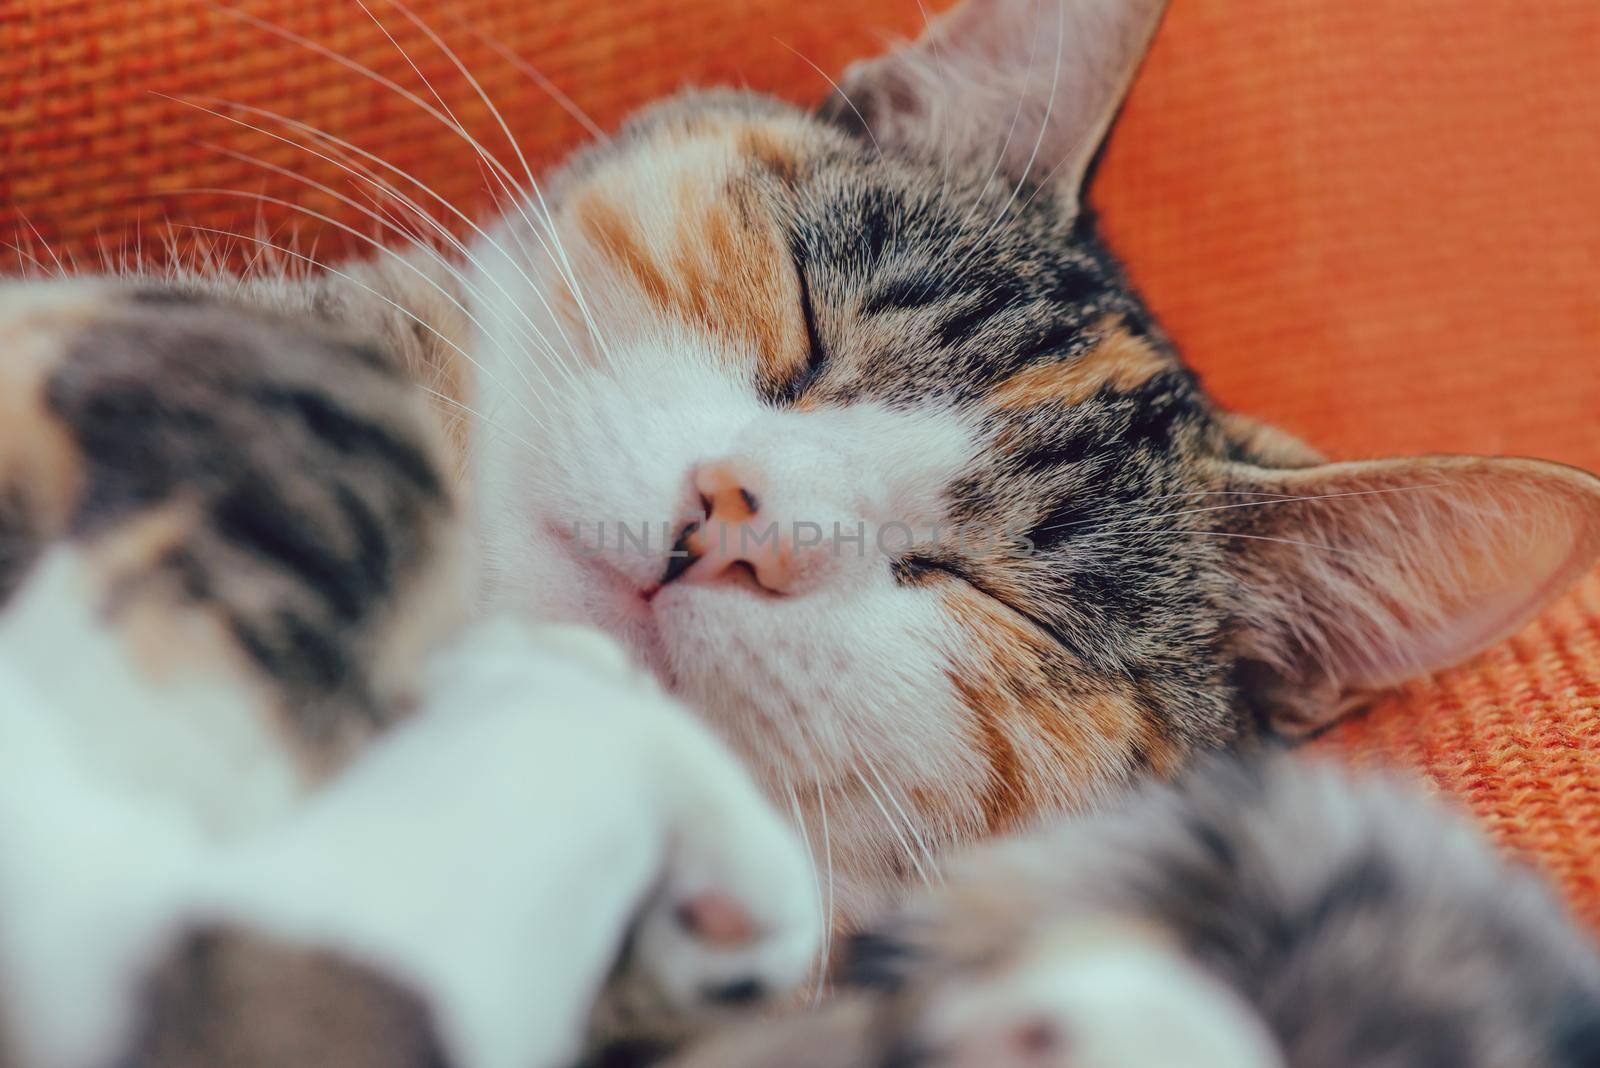 Cute sleeping cat by alexAleksei